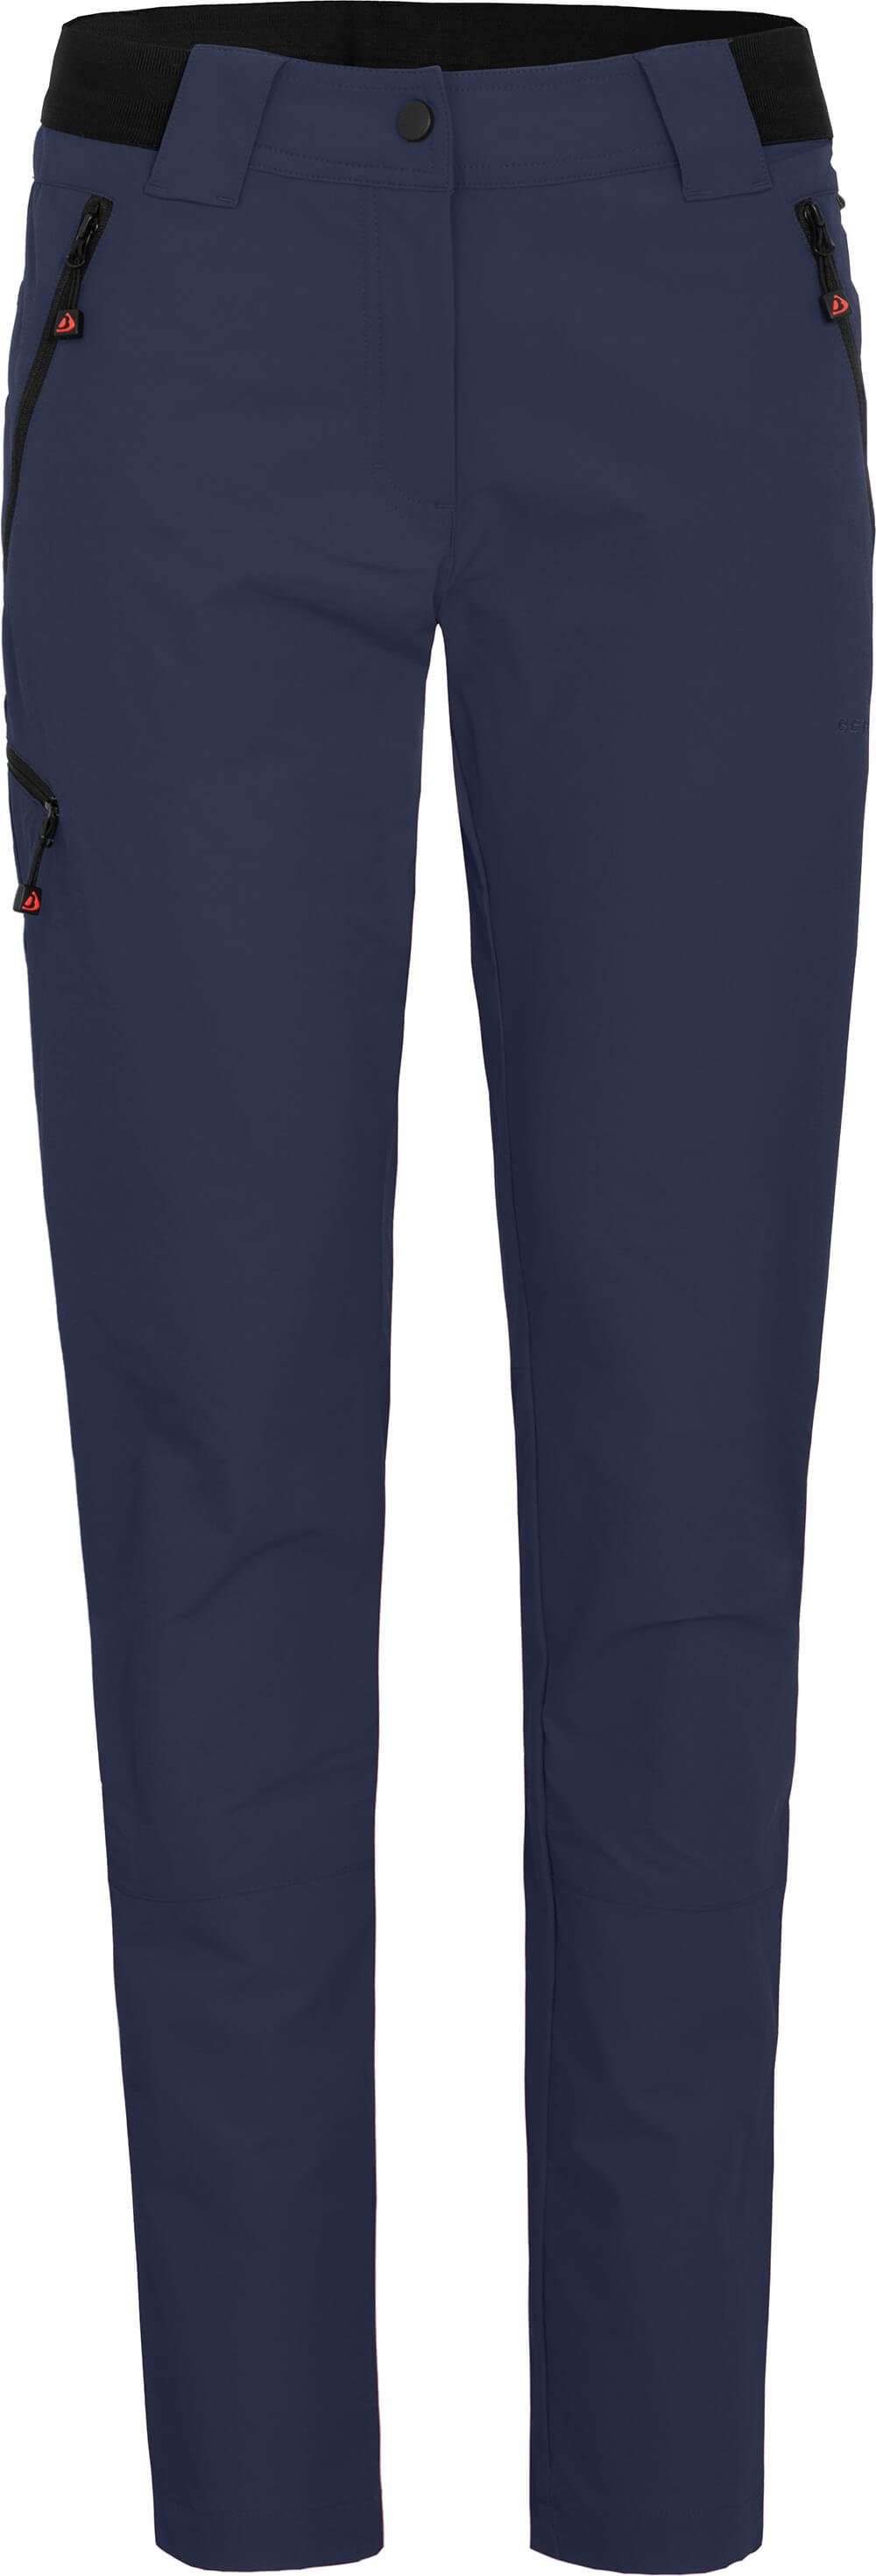 Bergson Outdoorhose VIDAA COMFORT (slim) Damen Wanderhose, leicht, strapazierfähig, Kurzgrößen, peacoat blau